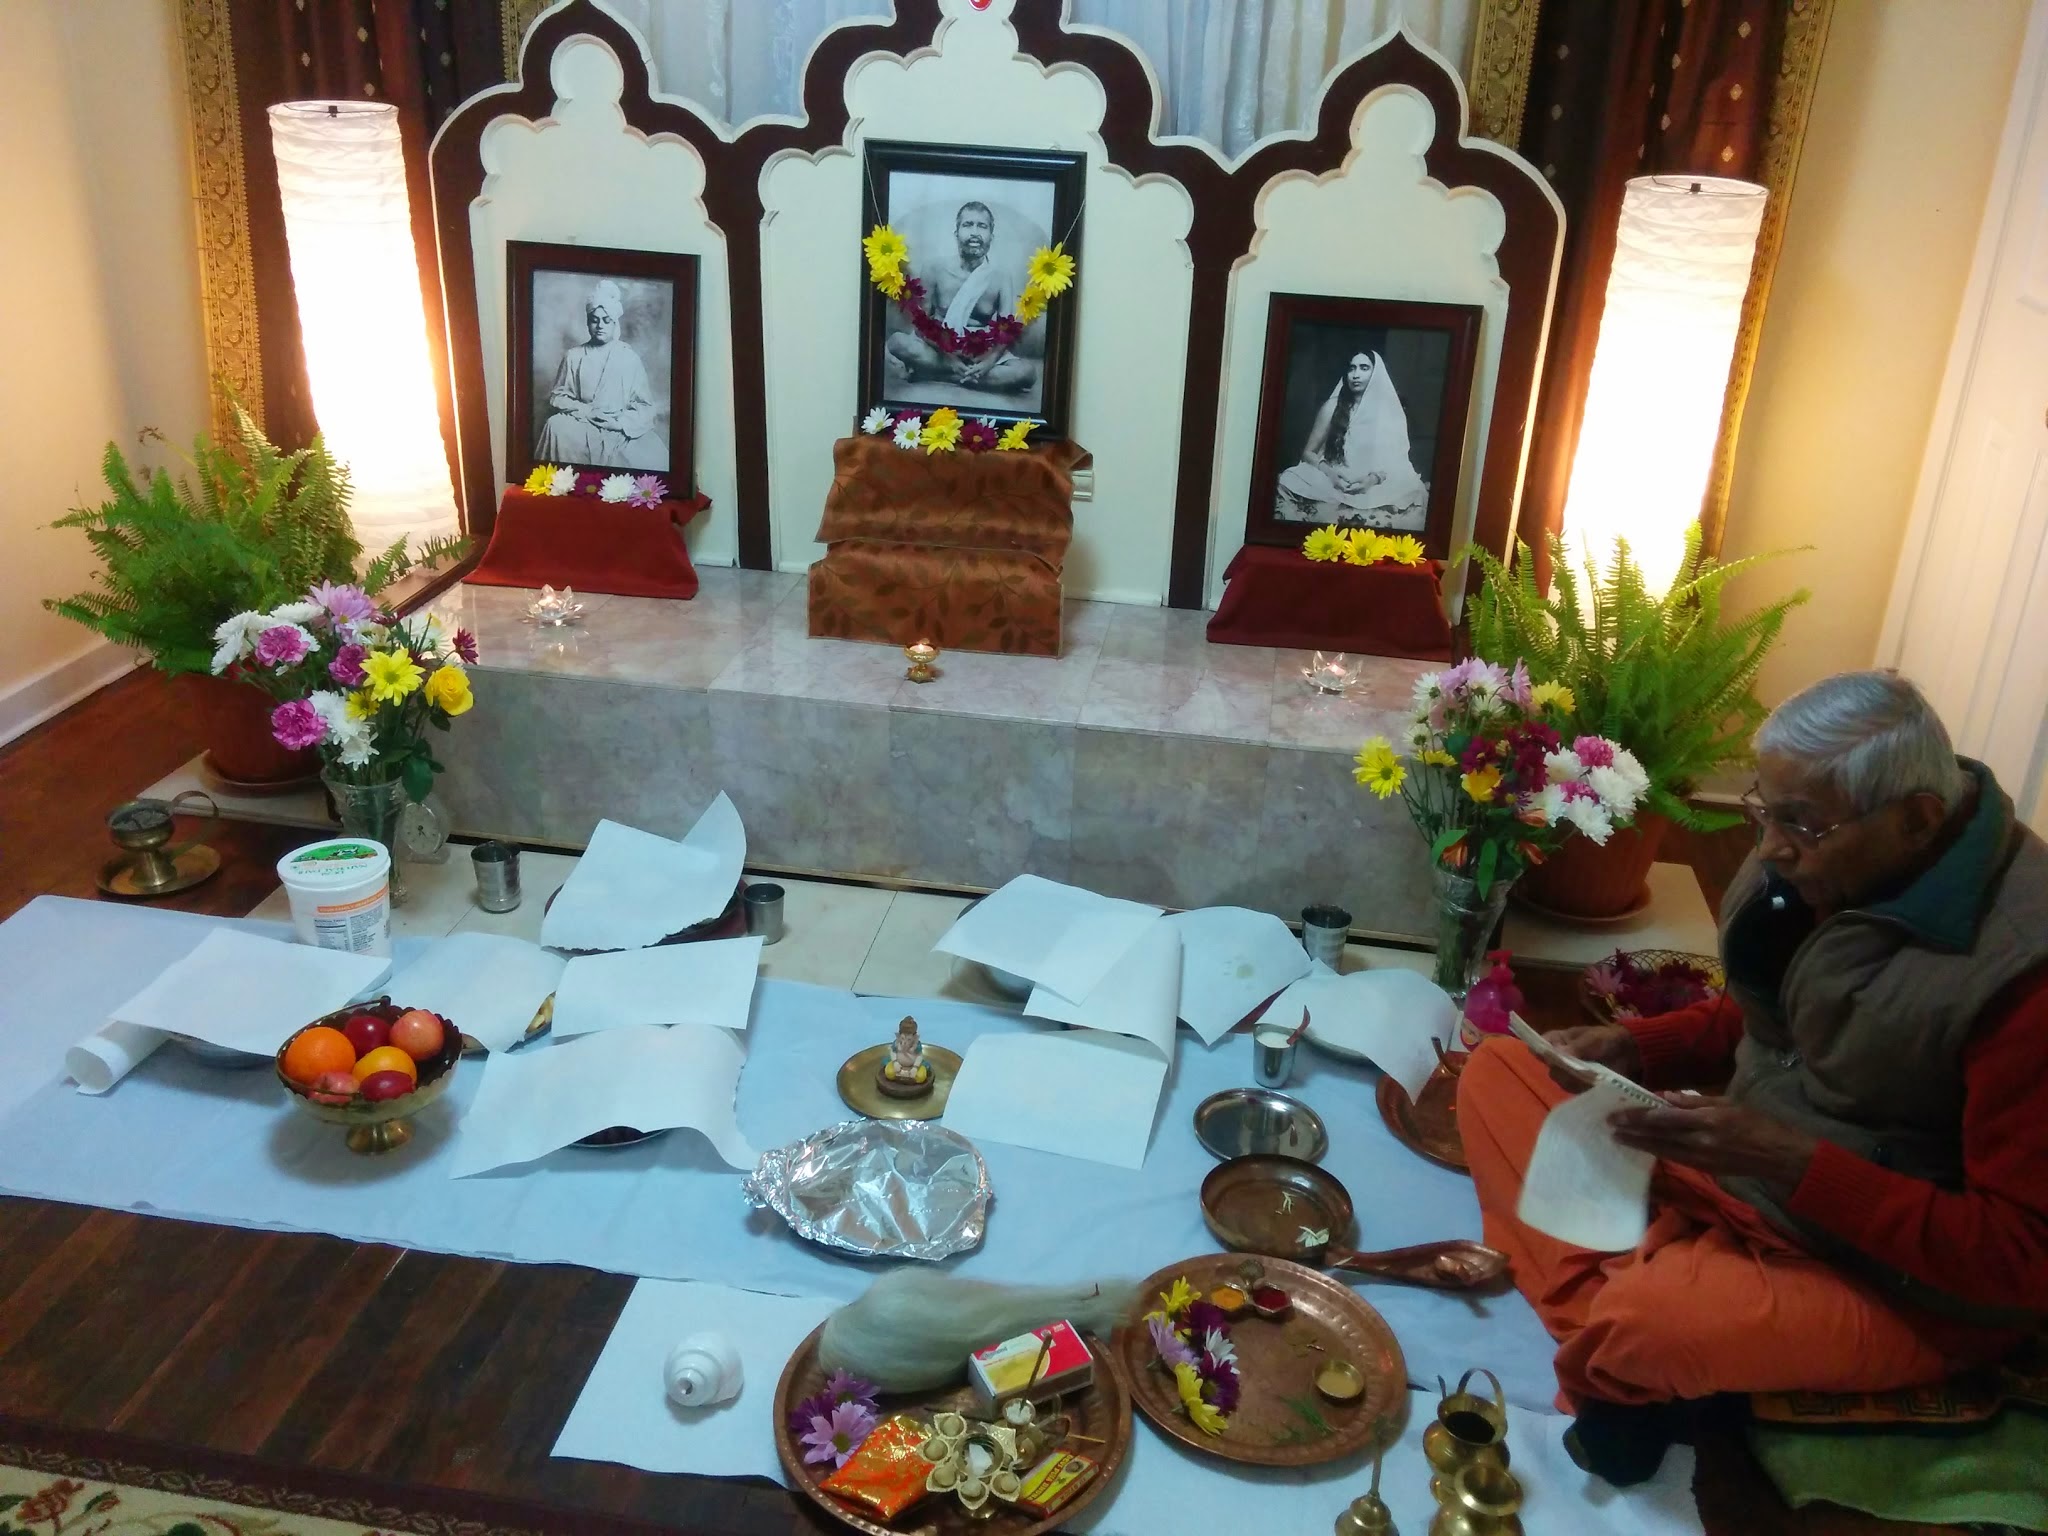 Swami Brahmarupananda visit Feb 26 - Mar 1, 2015 - 3 